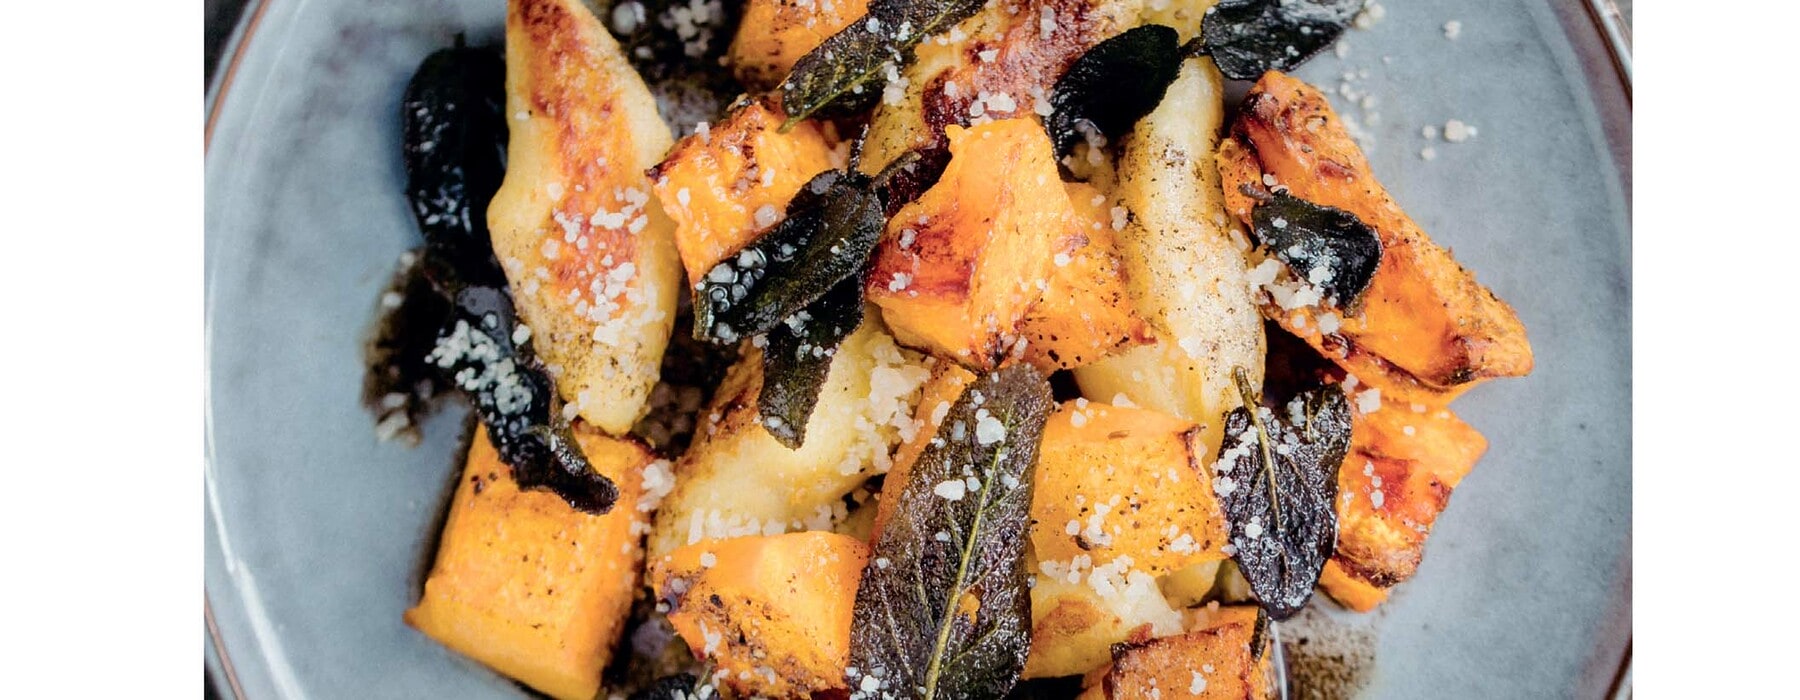 THR0422_FOOD_Potato-Gnocchi-with-Roast-Pumpkin-Image